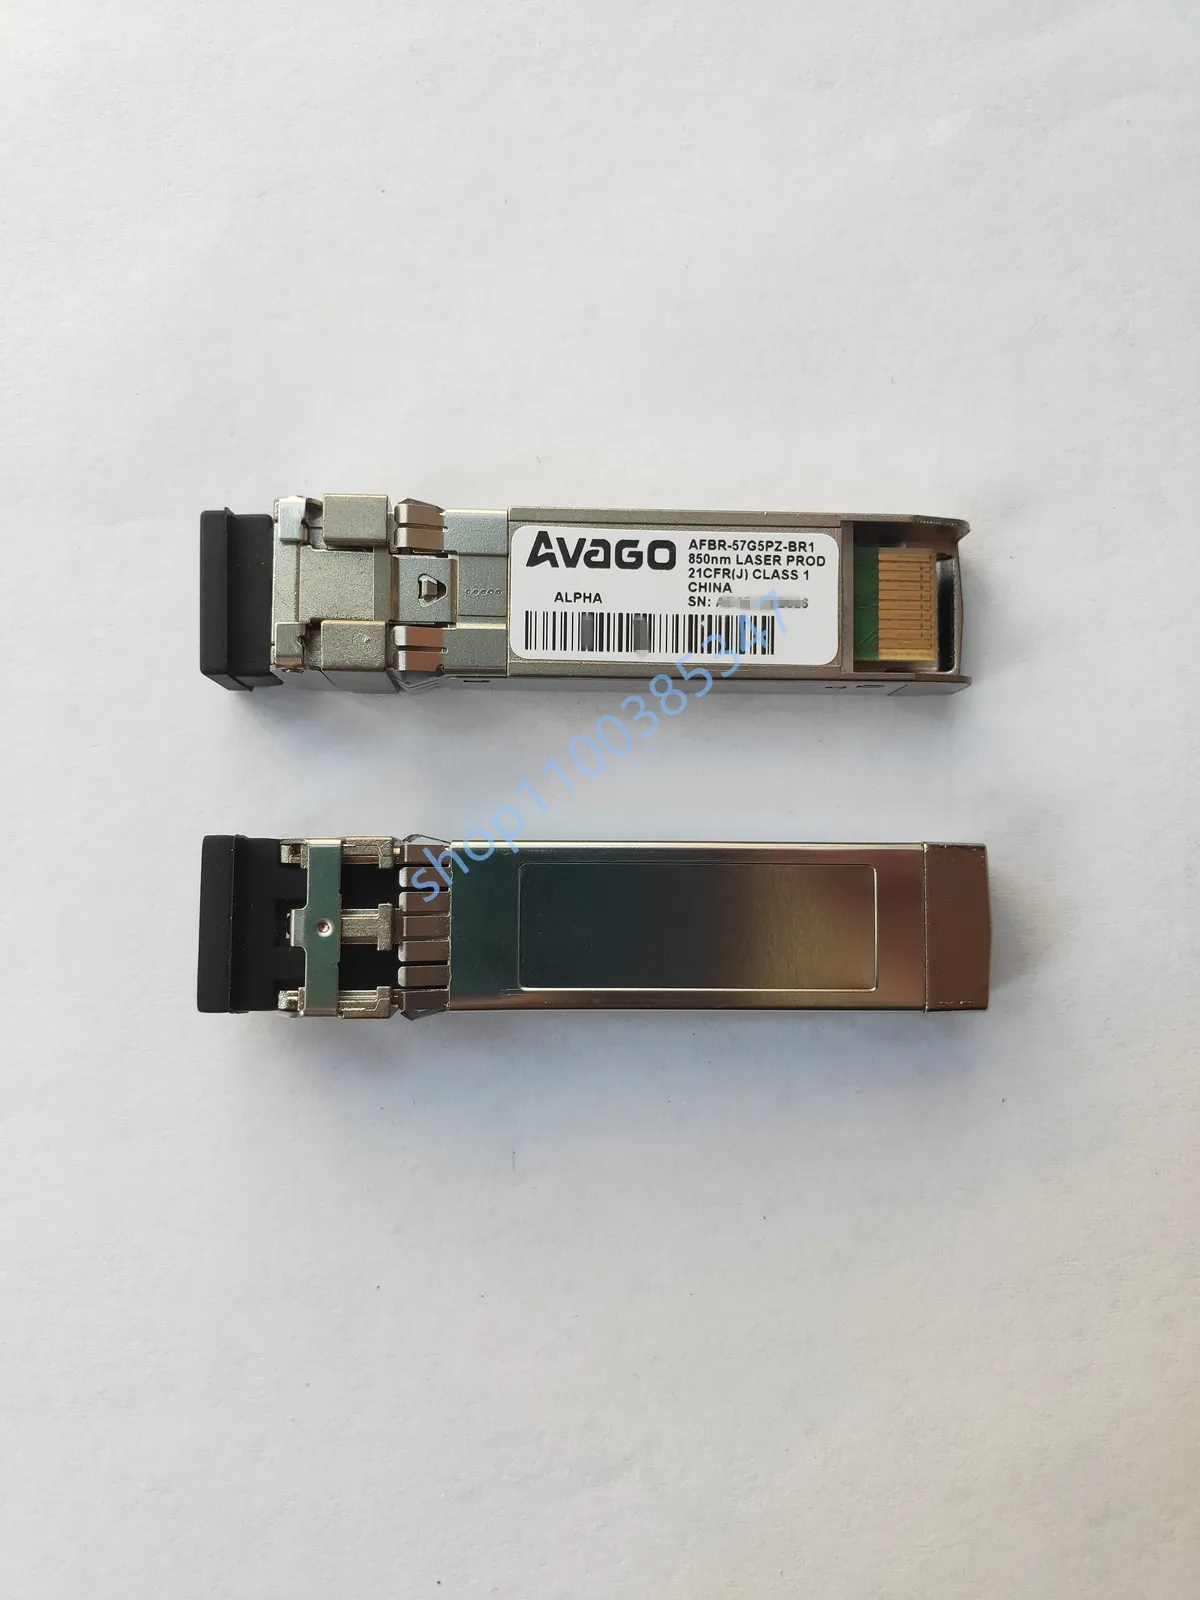 

AVAGO 32G fiber transceiver AFBR-57G5PZ-BR1 AVAGO 32GB module sfp